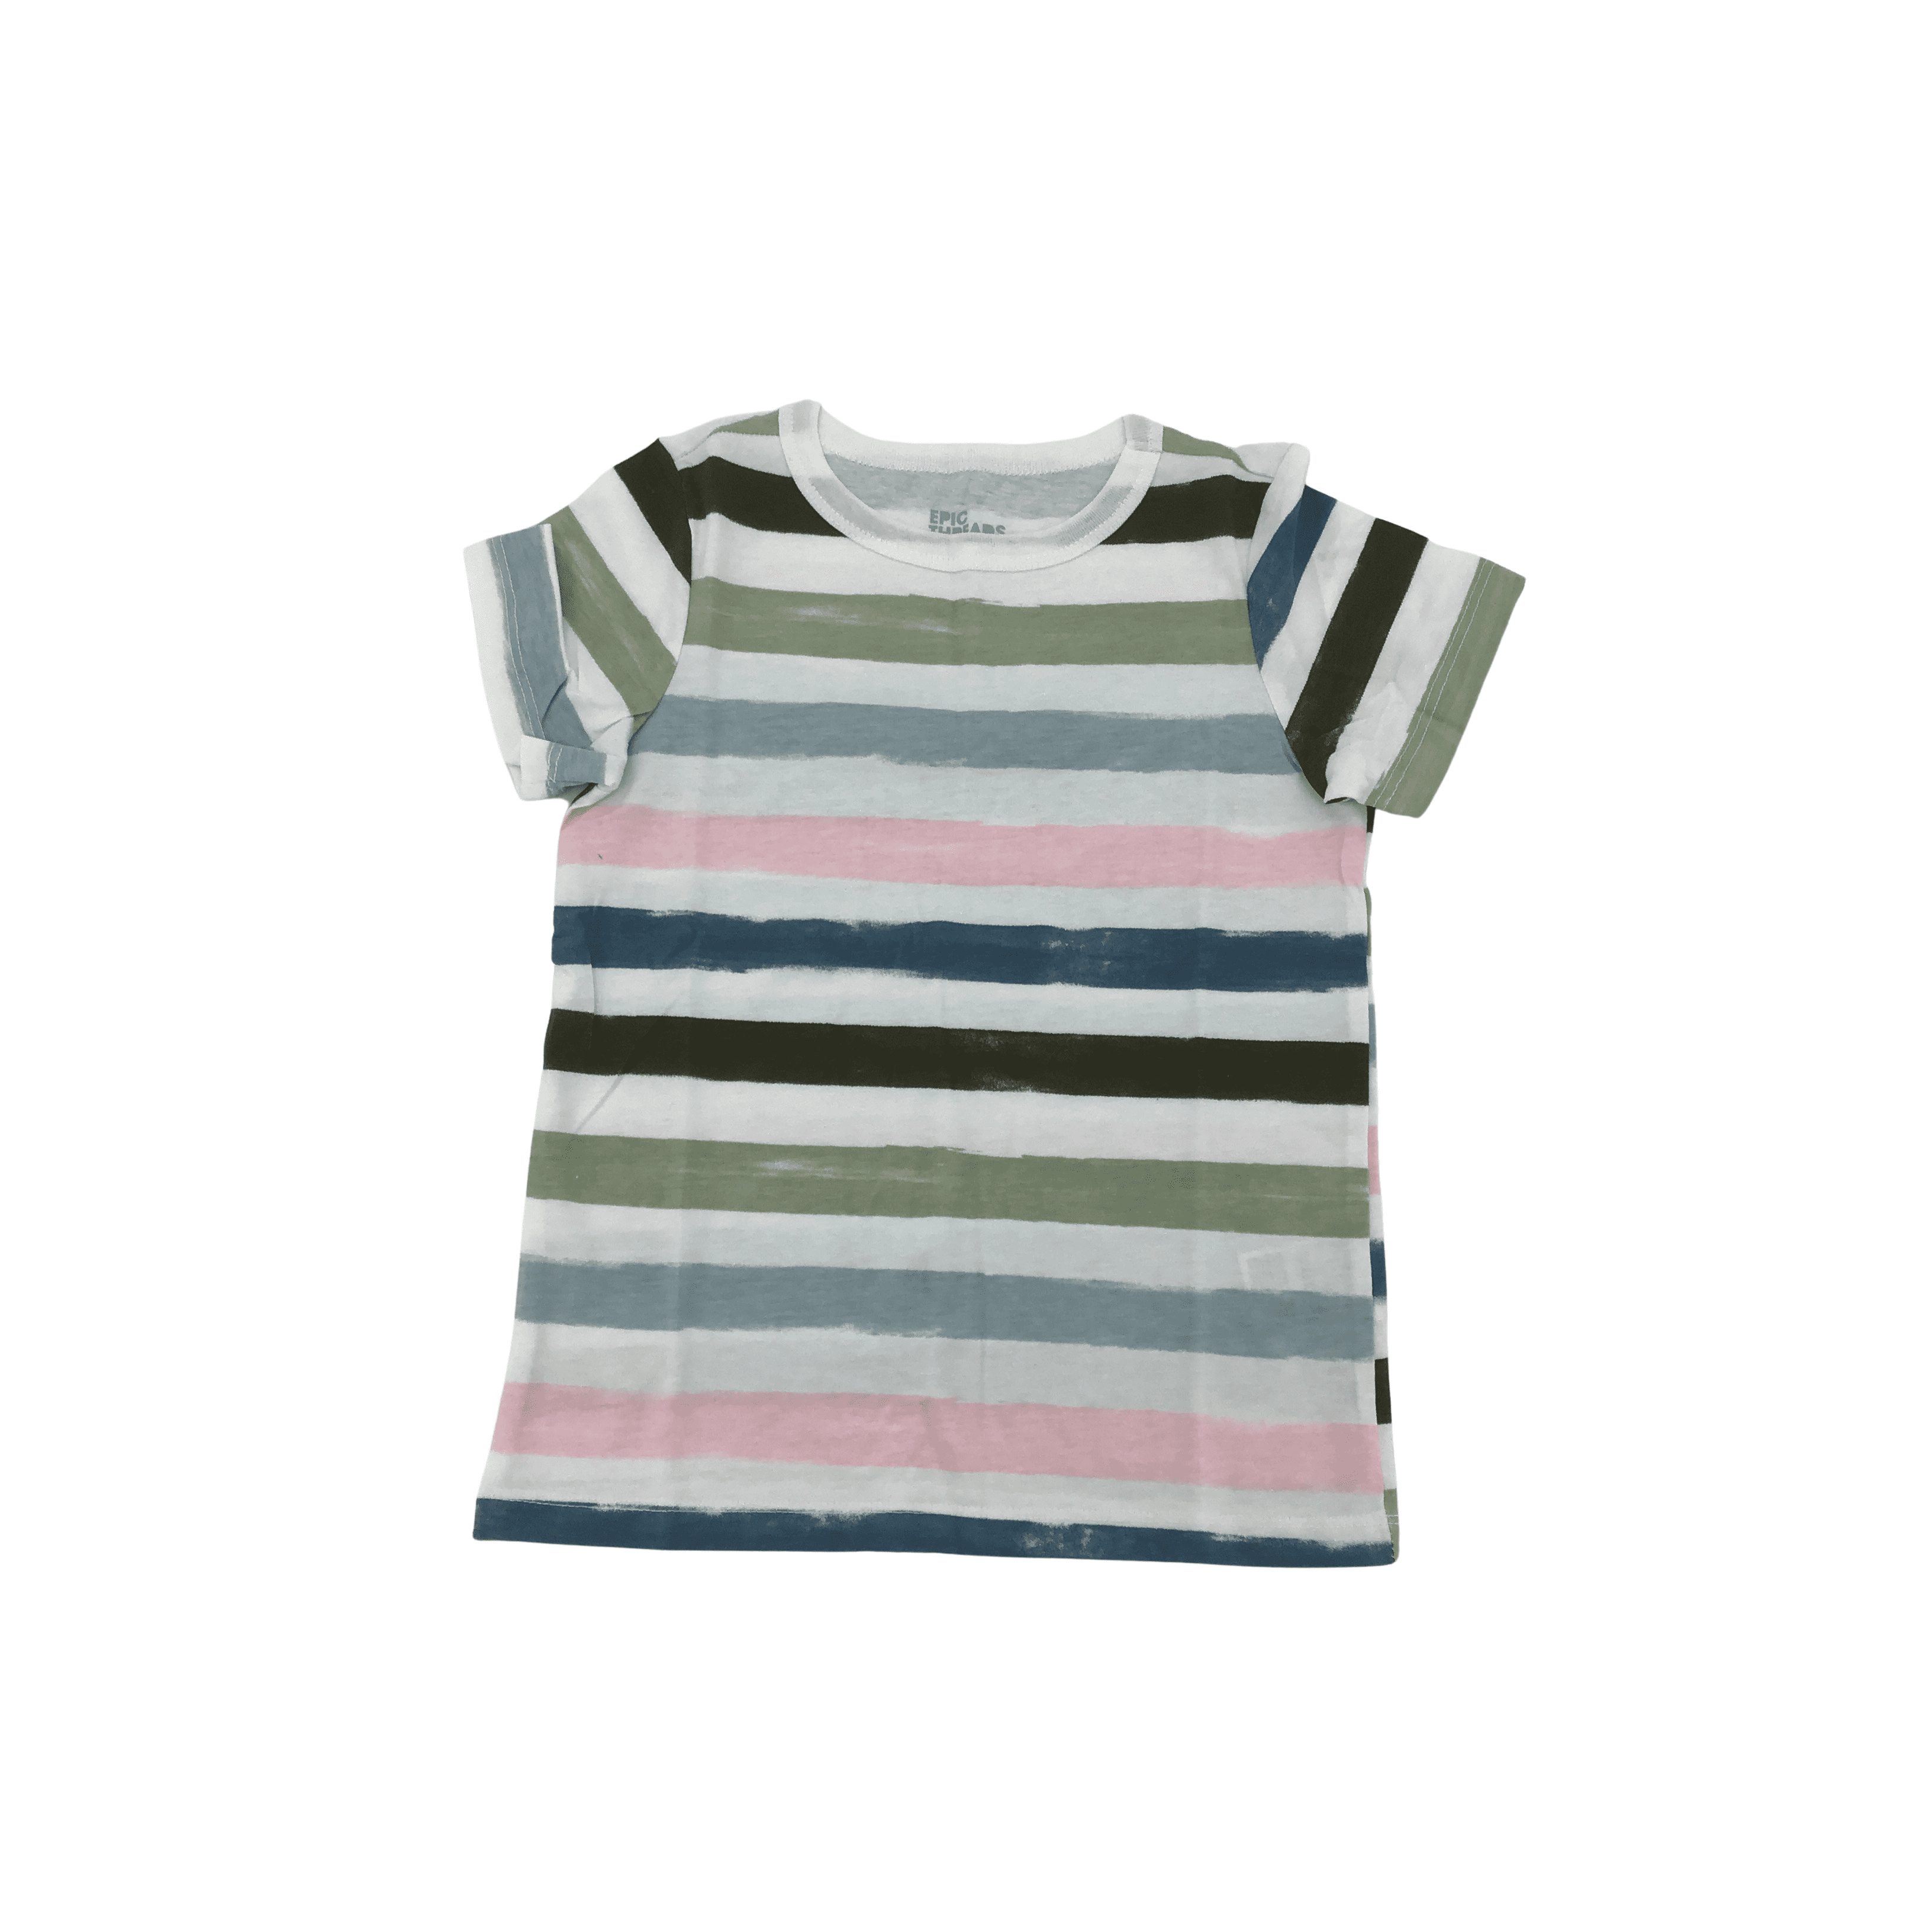 Epic Threads Children's T-Shirt / Multi Coloured Stripes / Various Sizes